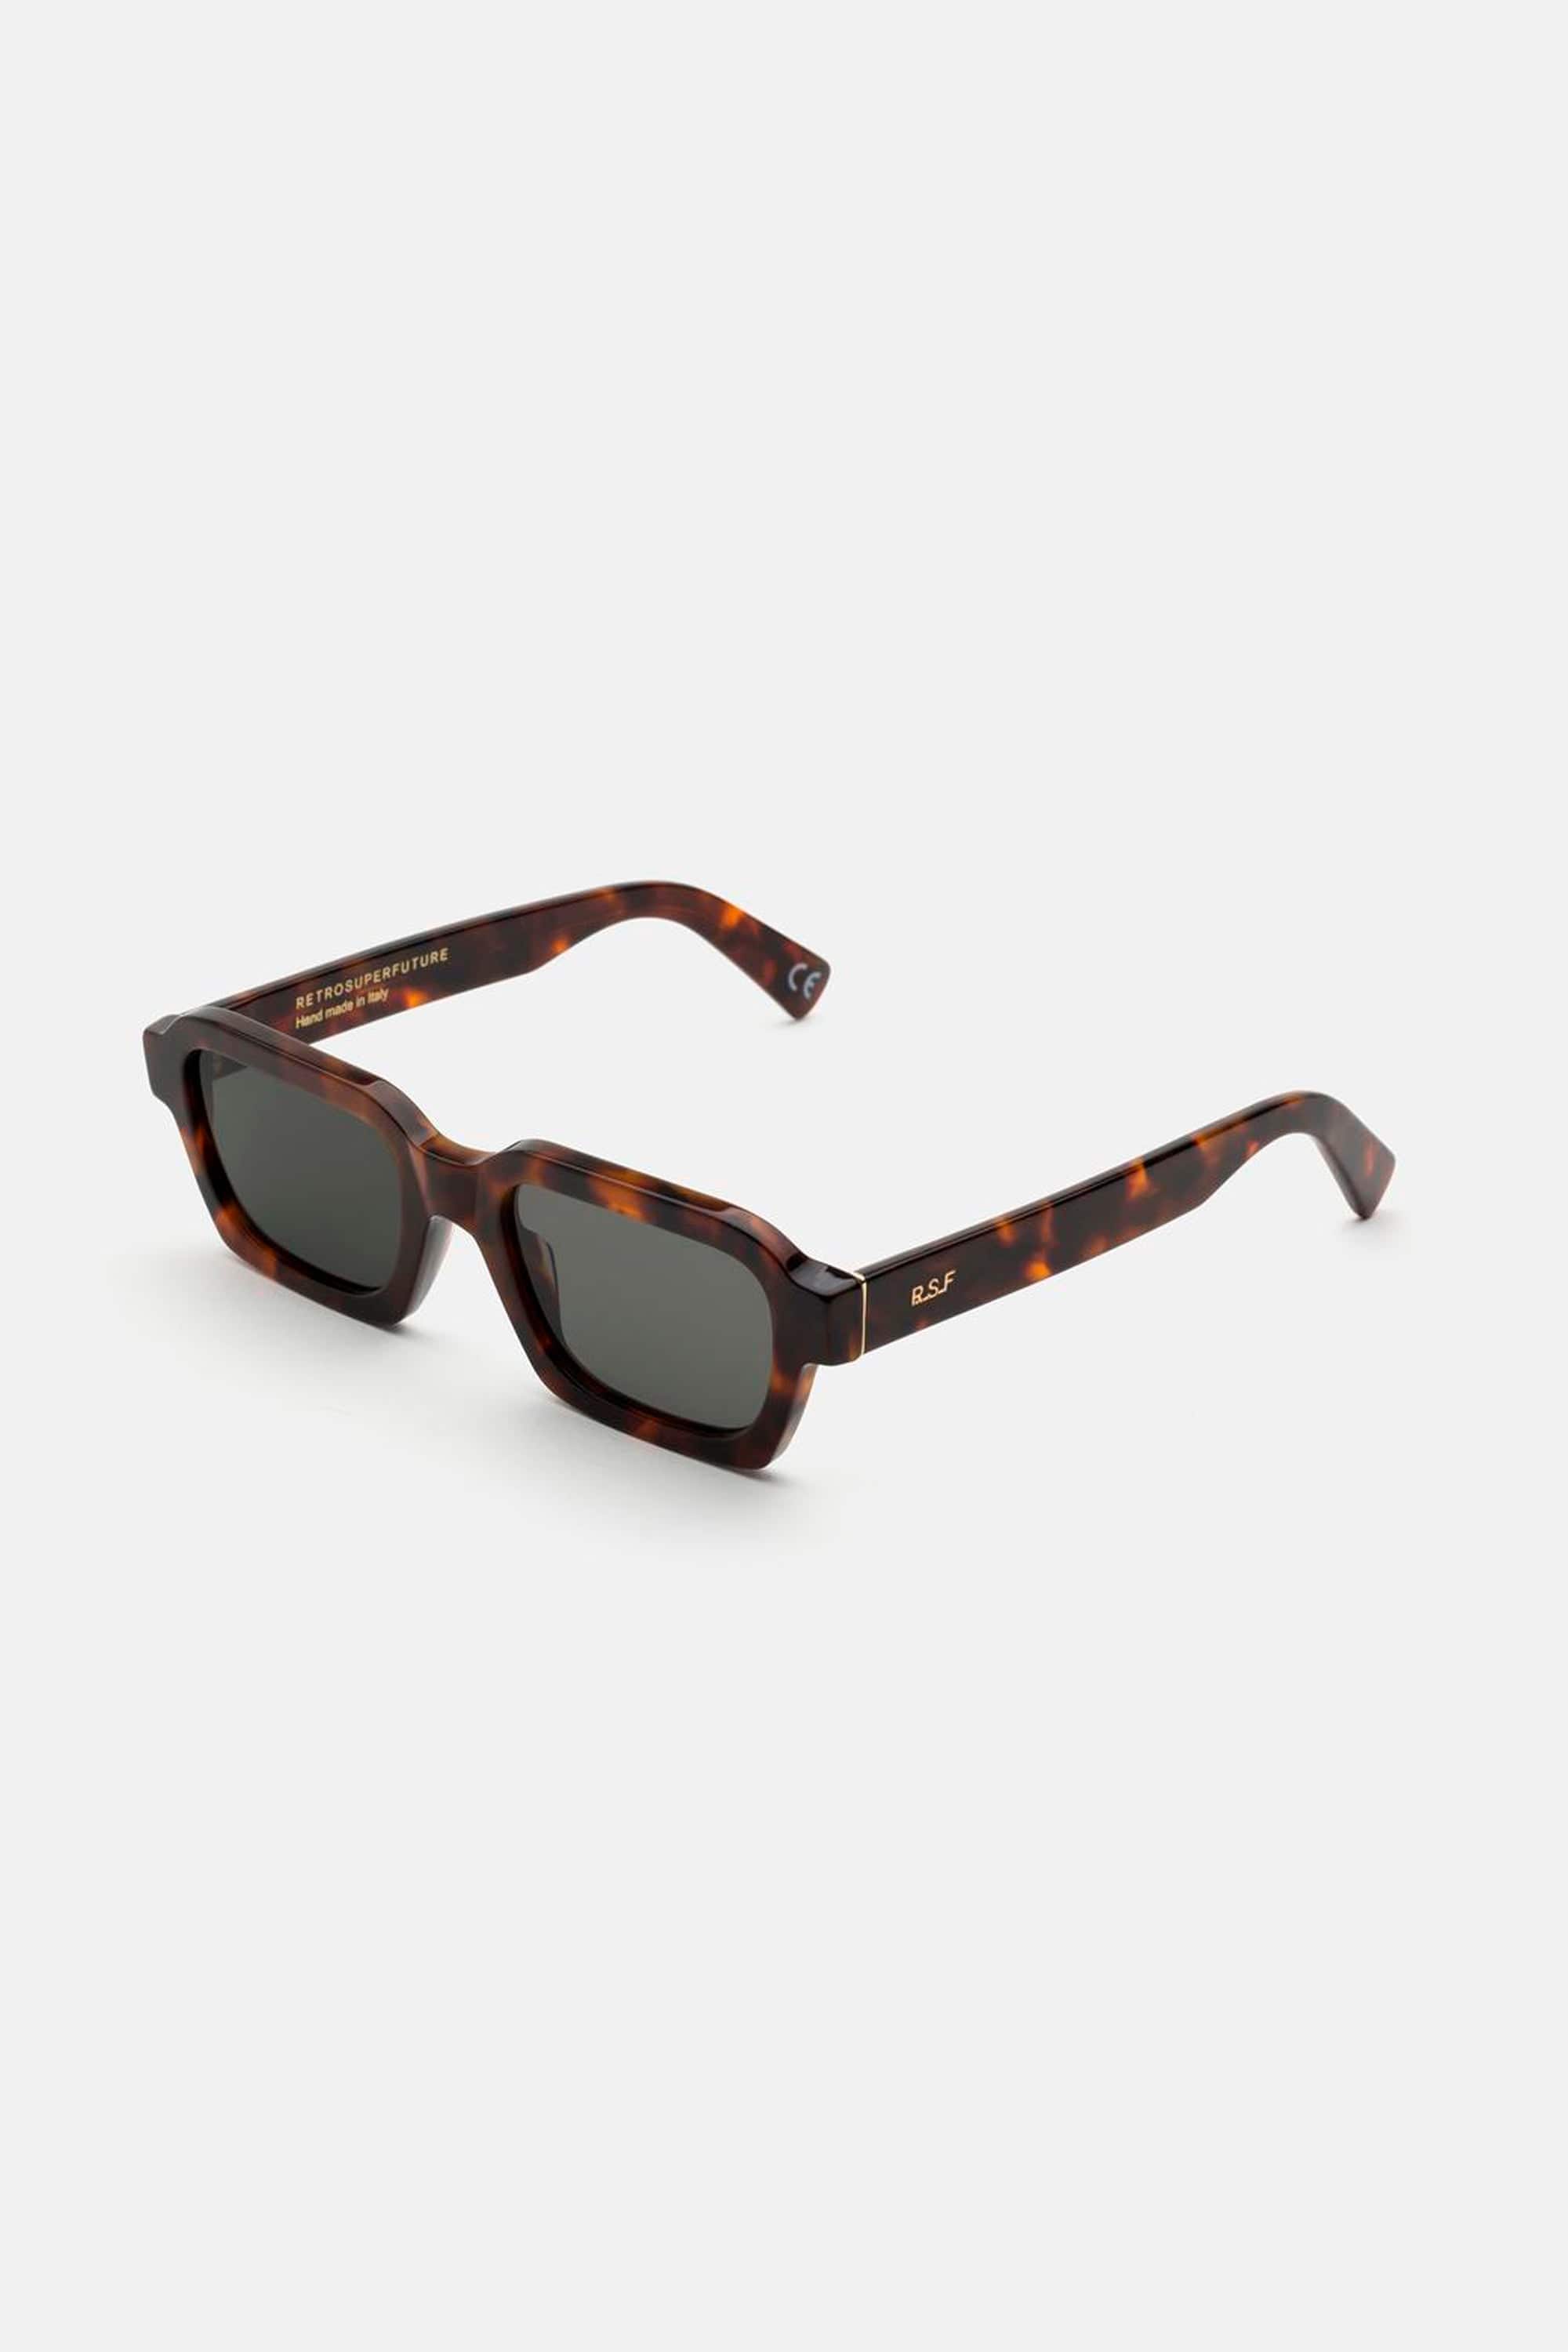 Retrosuperfuture caro 3627 sunglasses - Eyewear Club